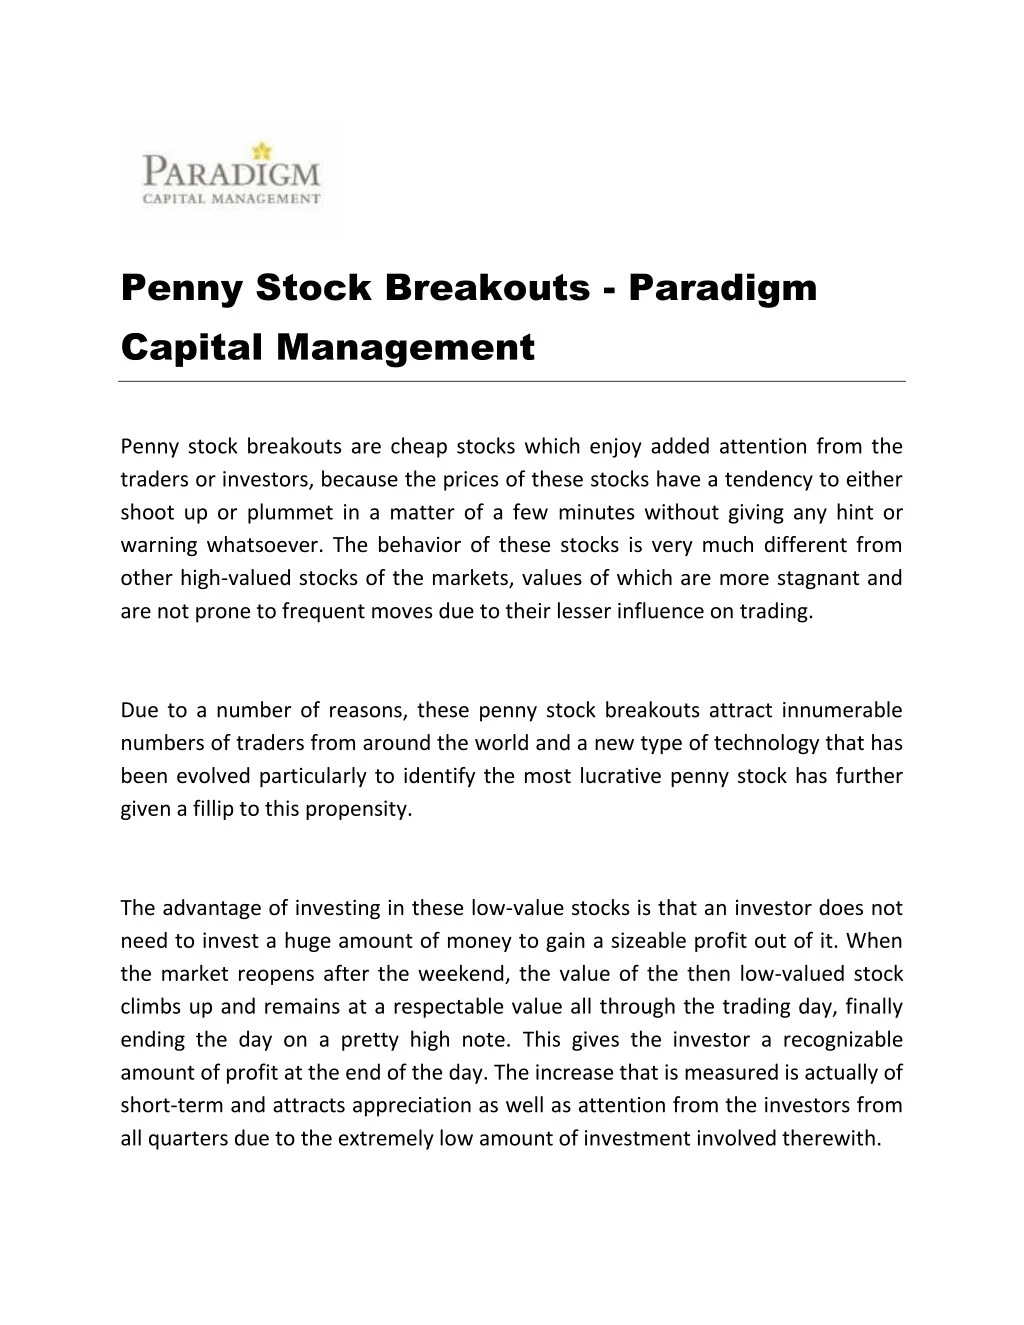 penny stock breakouts paradigm capital management